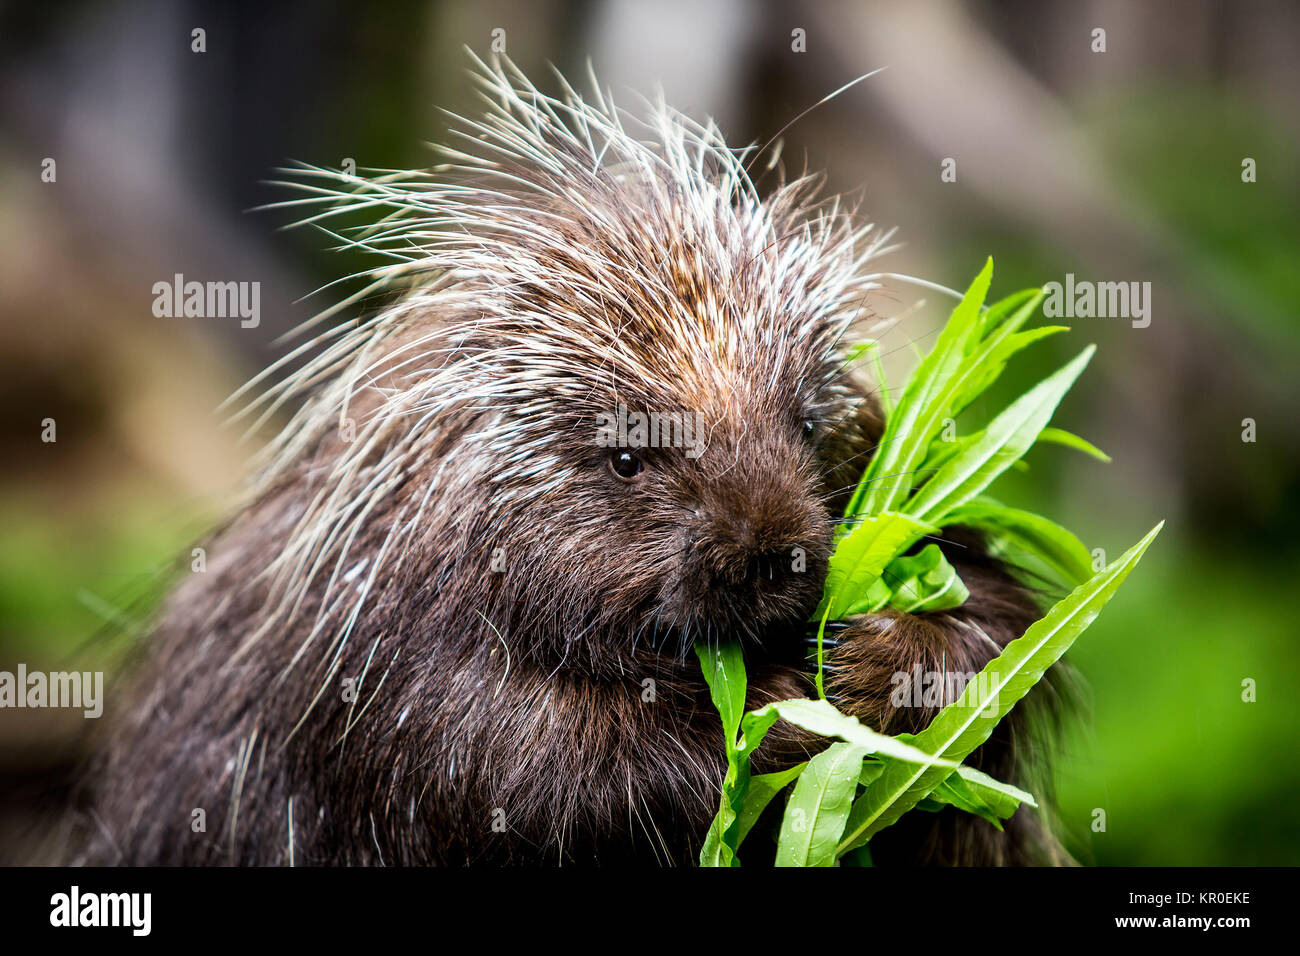 https://c8.alamy.com/comp/KR0EKE/new-world-porcupine-eating-KR0EKE.jpg